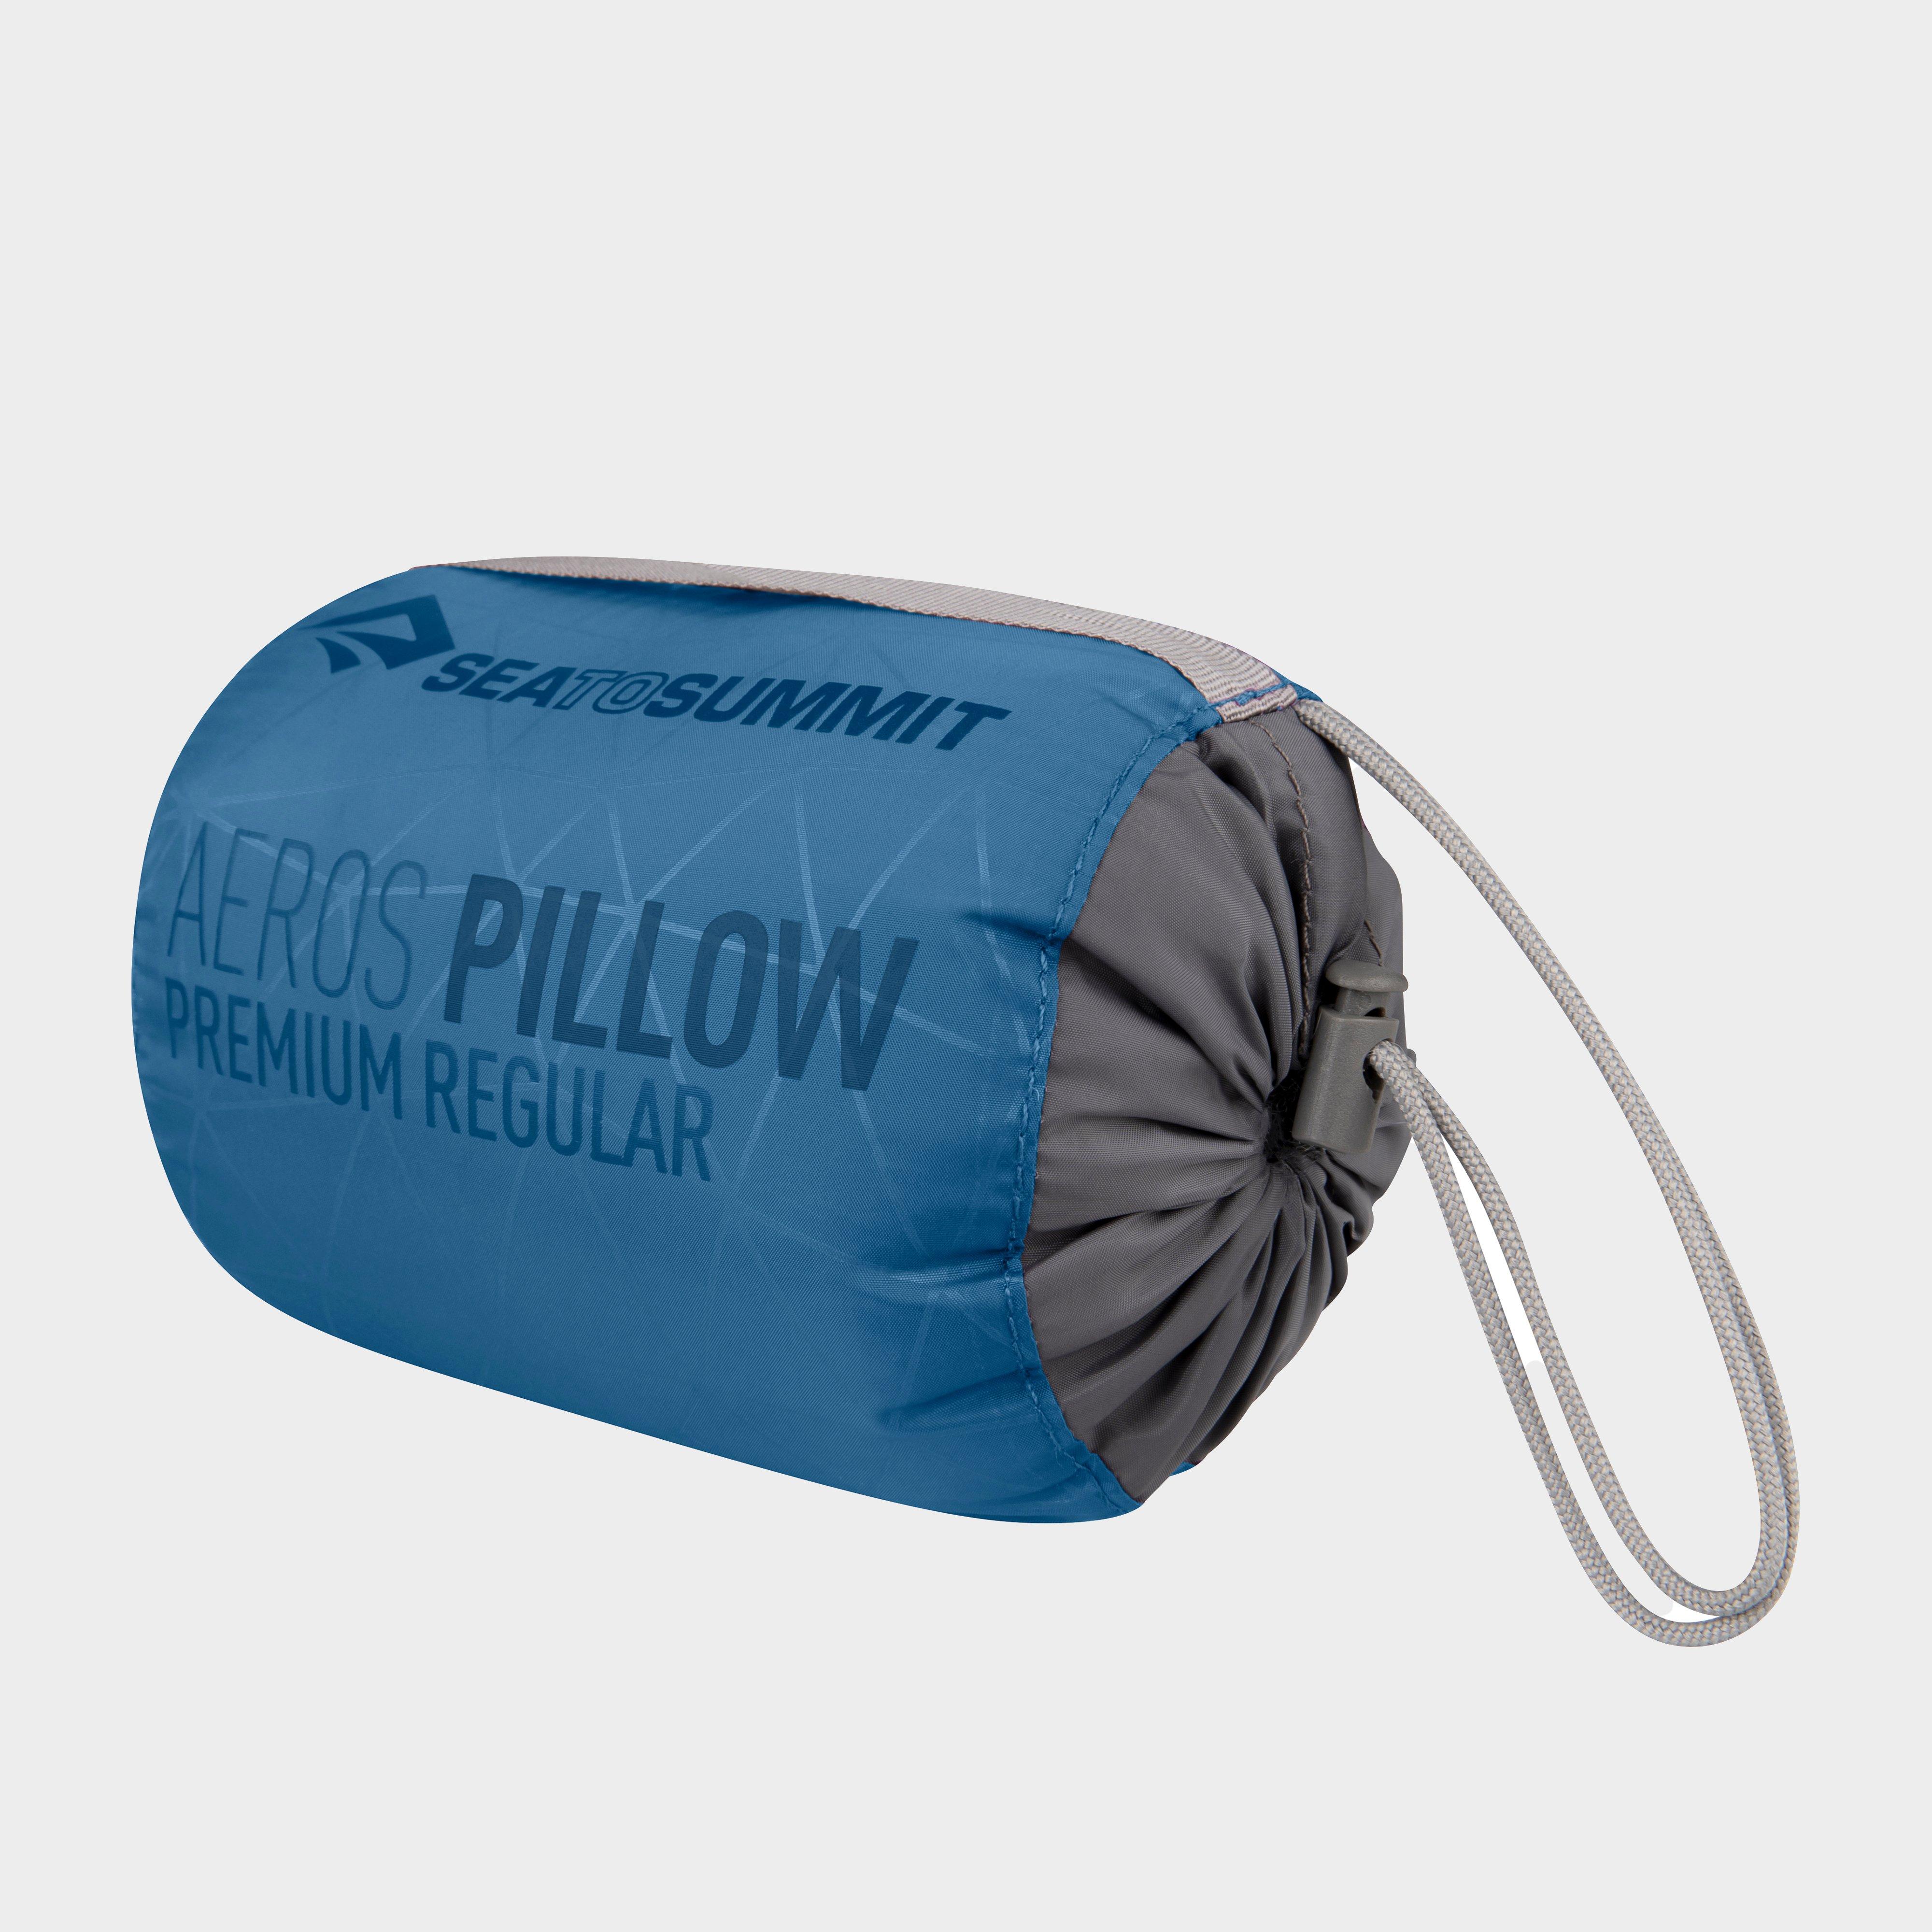 Sea To Summit Aeros Premium Pillow (Regular) Review